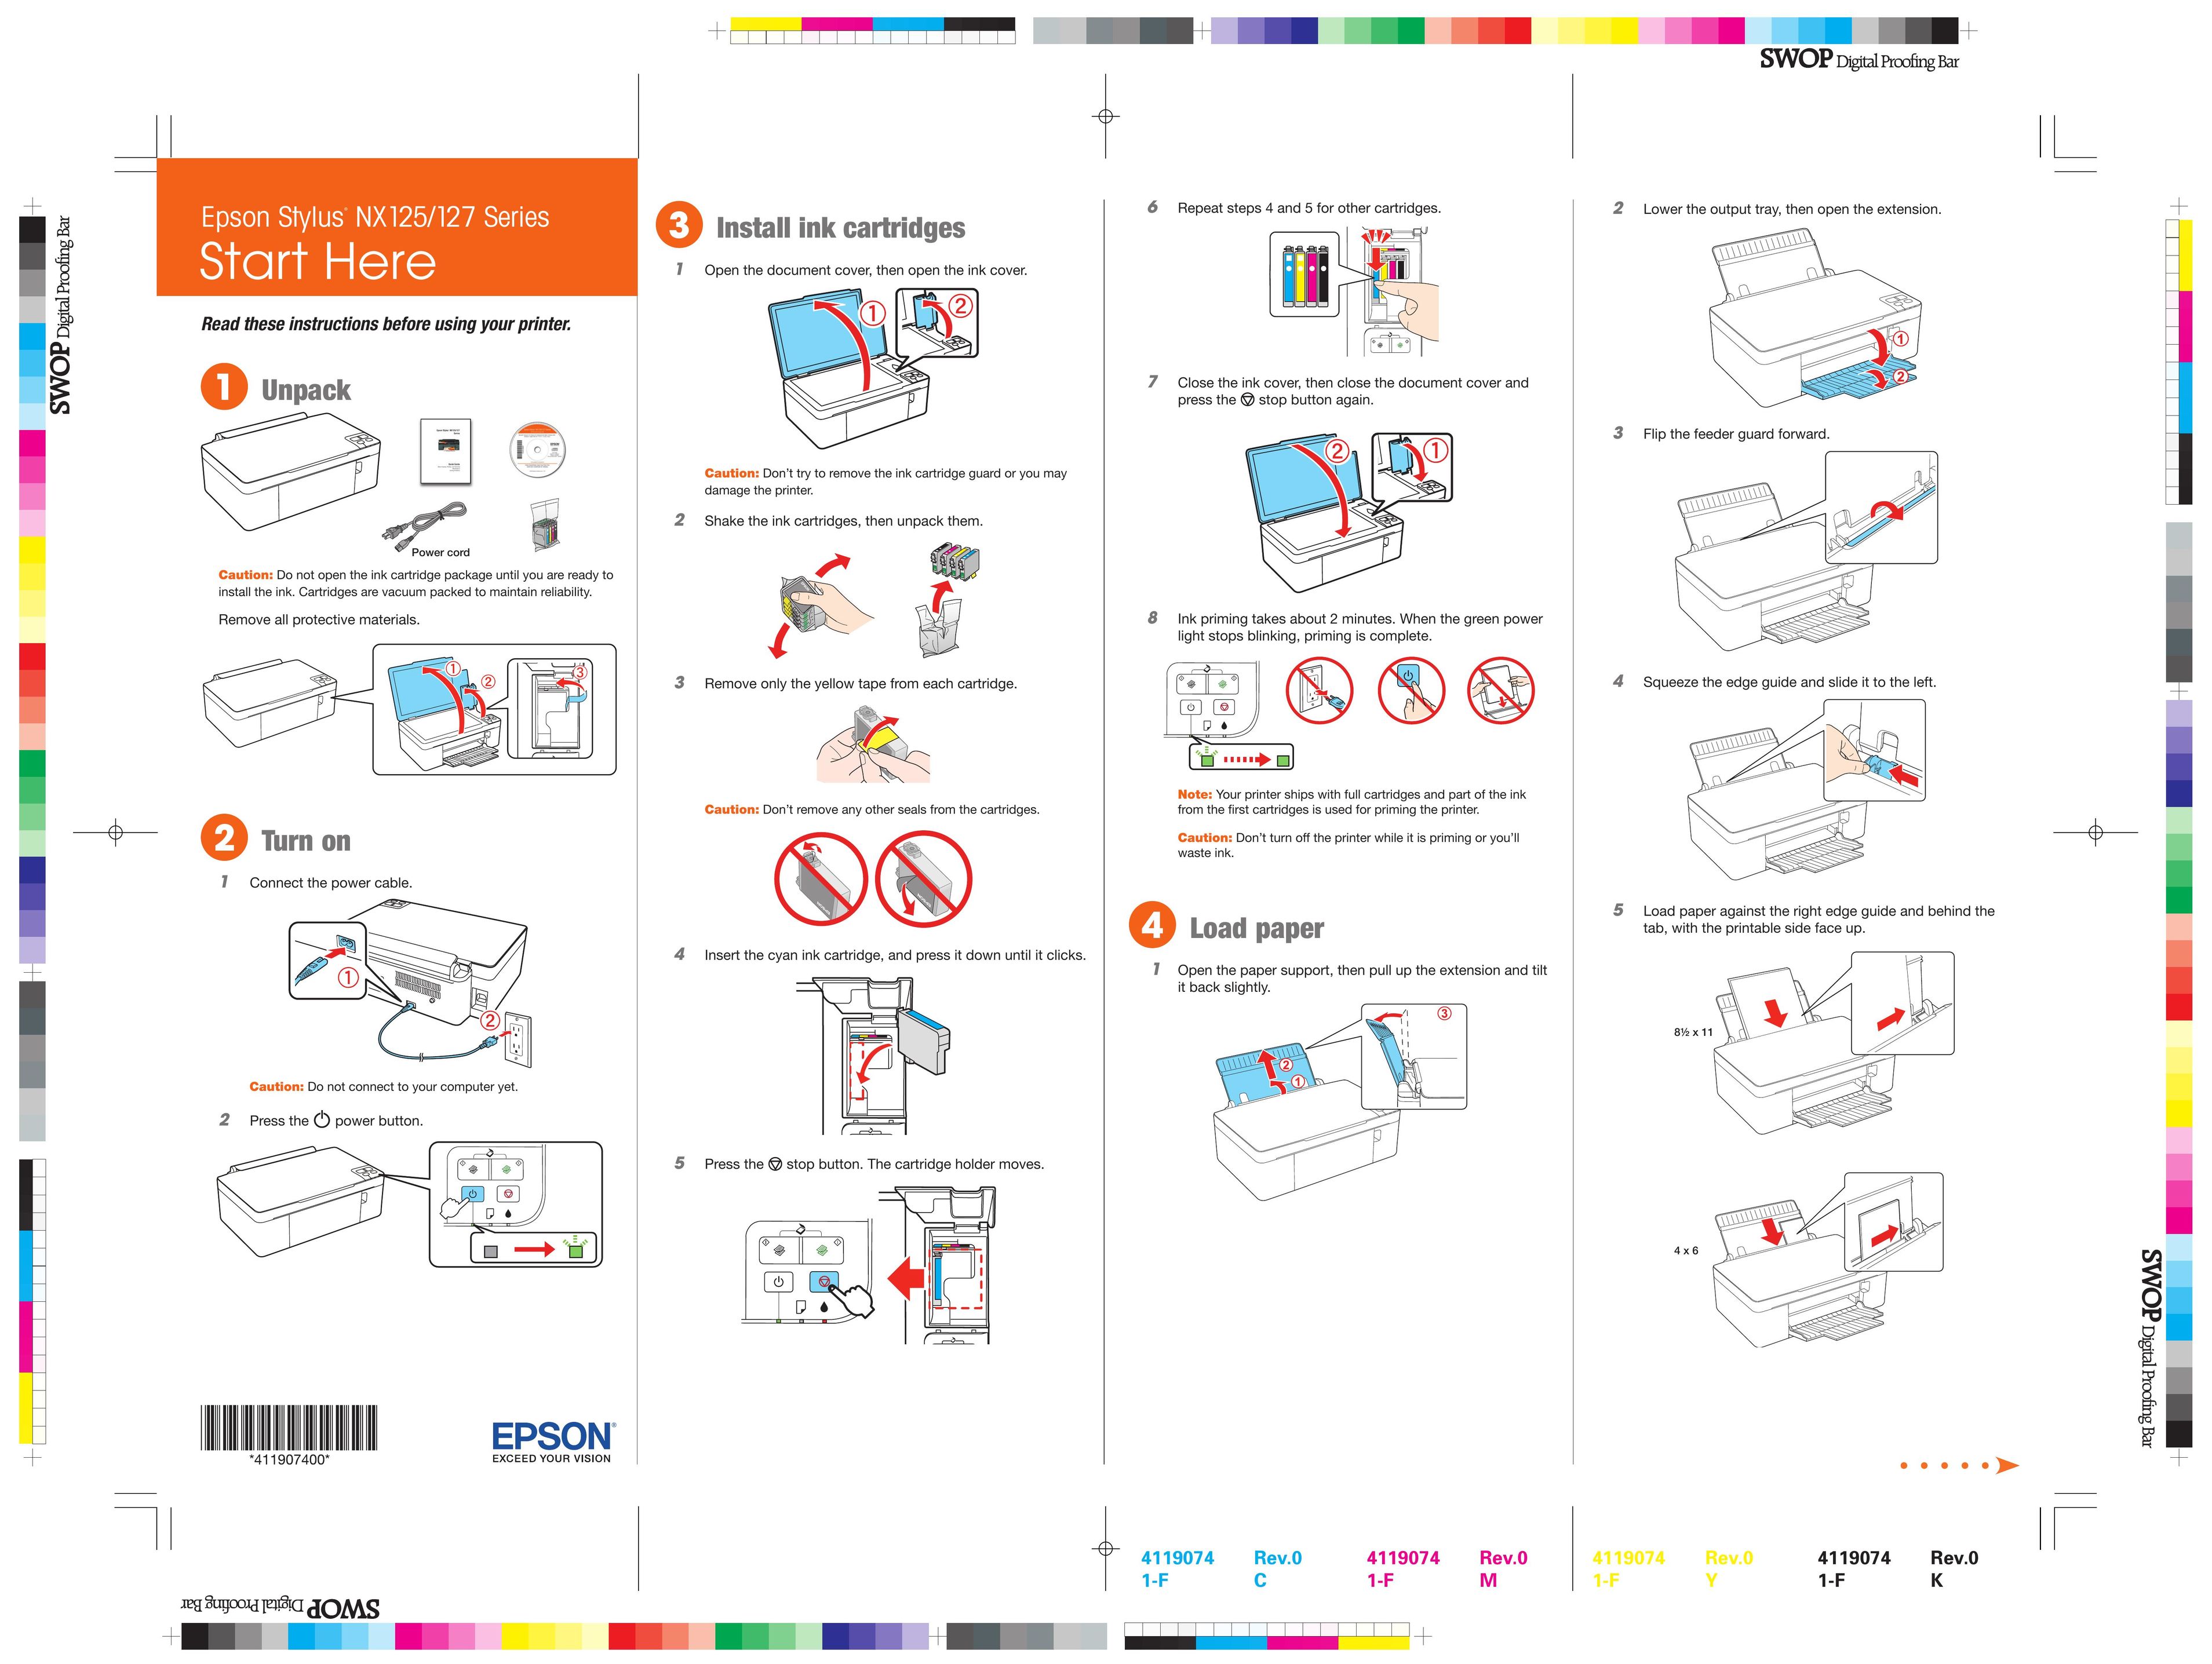 Garmin NX125 Printer User Manual